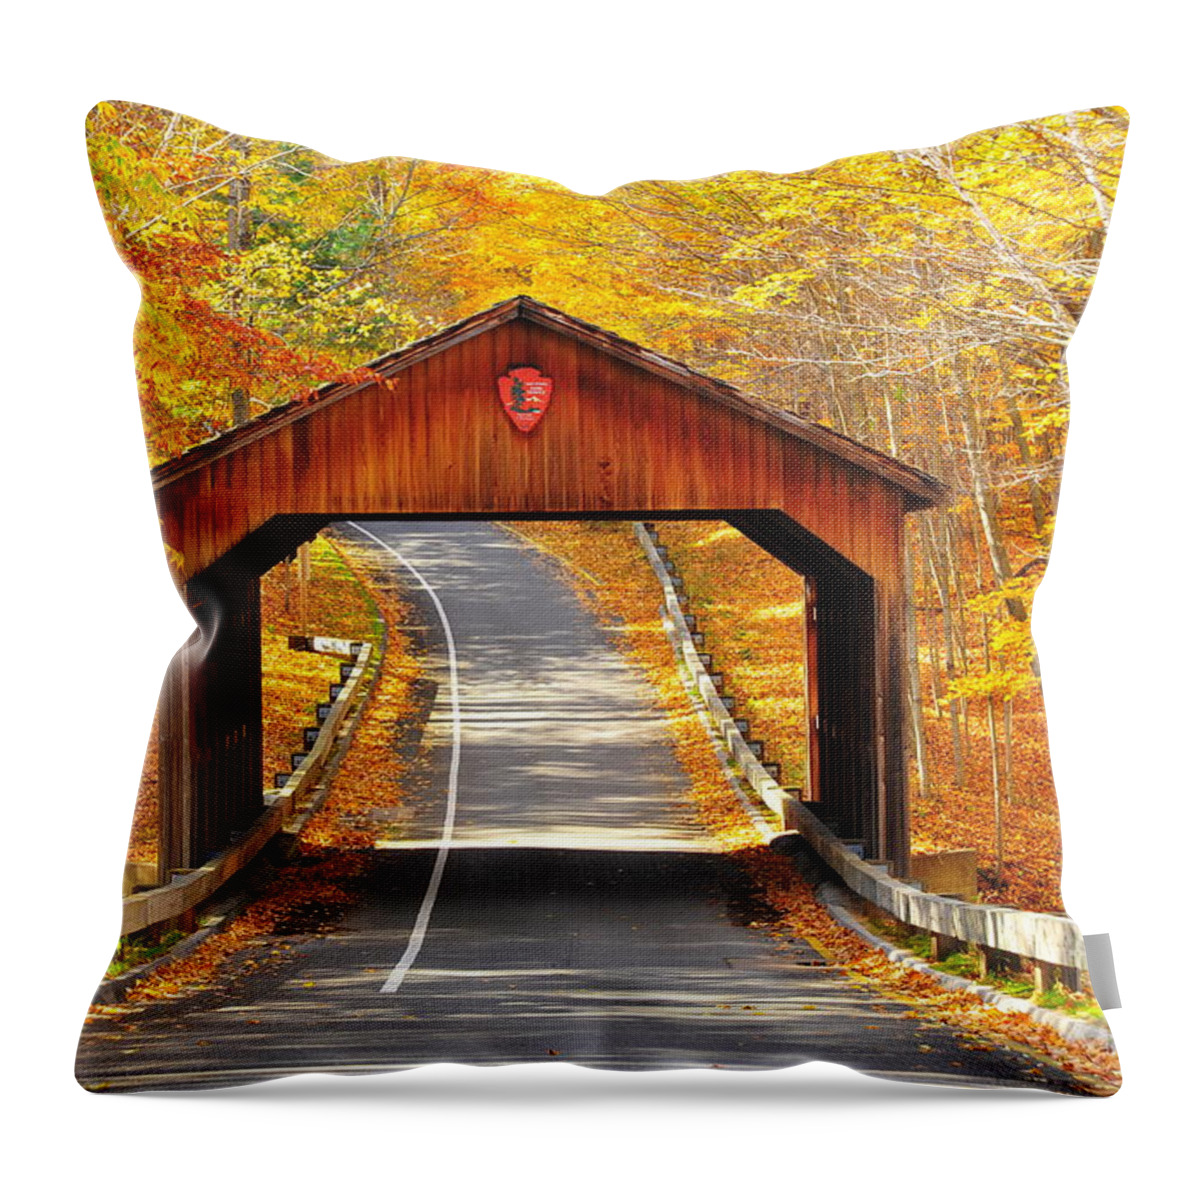 Sleeping Bear Throw Pillow featuring the photograph Covered Bridge at Sleeping Bear National Lakeshore by Terri Gostola